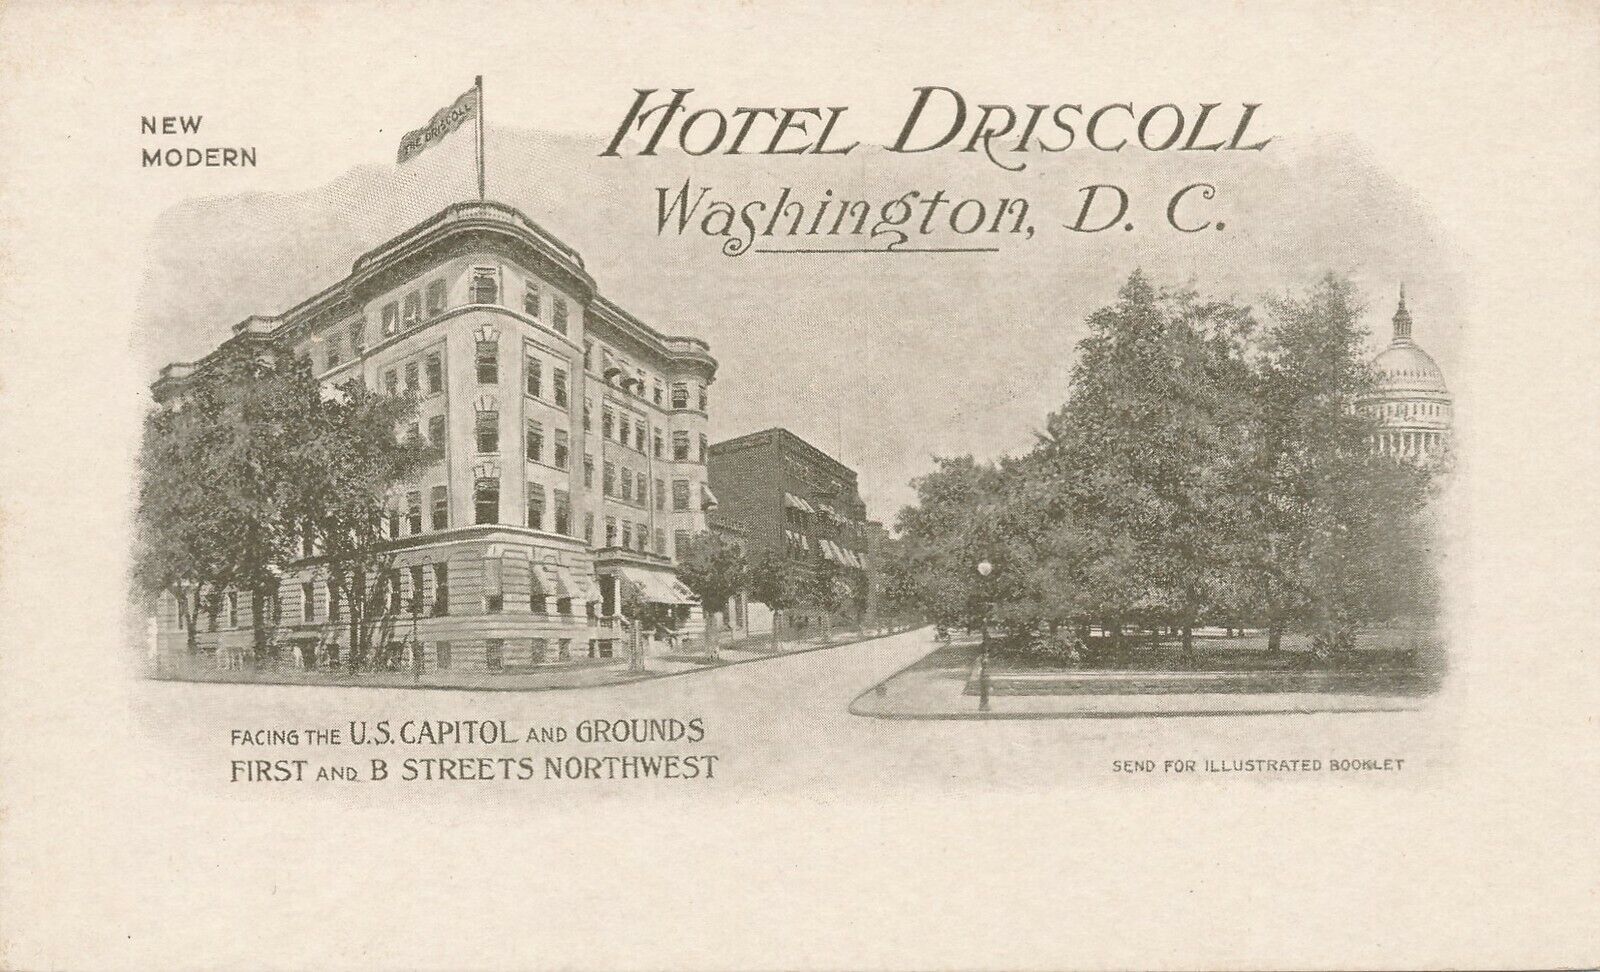 WASHINGTON DC – Hotel Driscoll